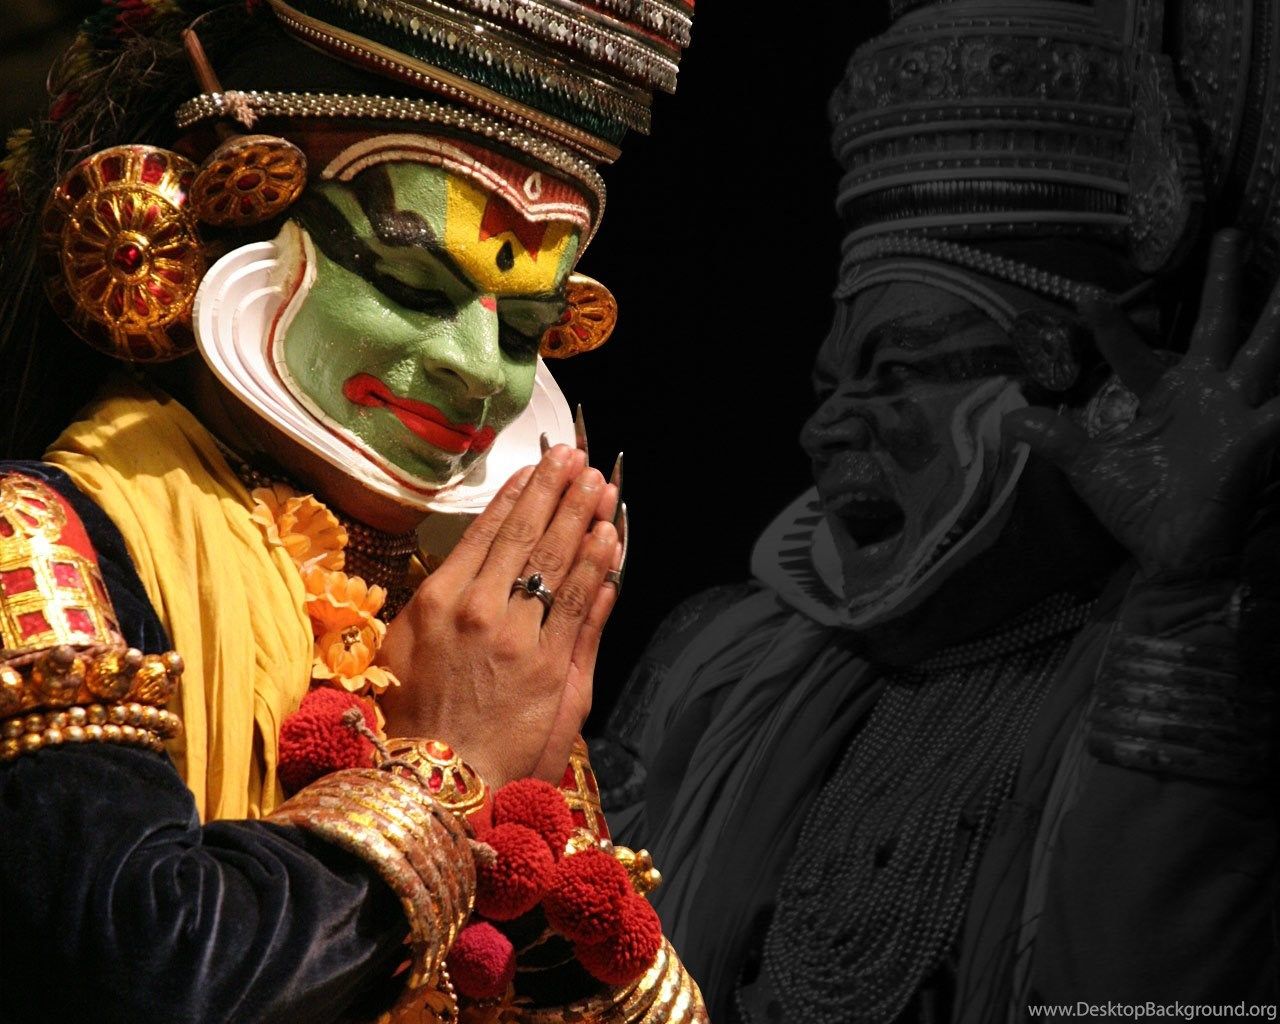 Visitor For Travel: Amazing Kerala Kathakali Dance Form Photo. Desktop Background